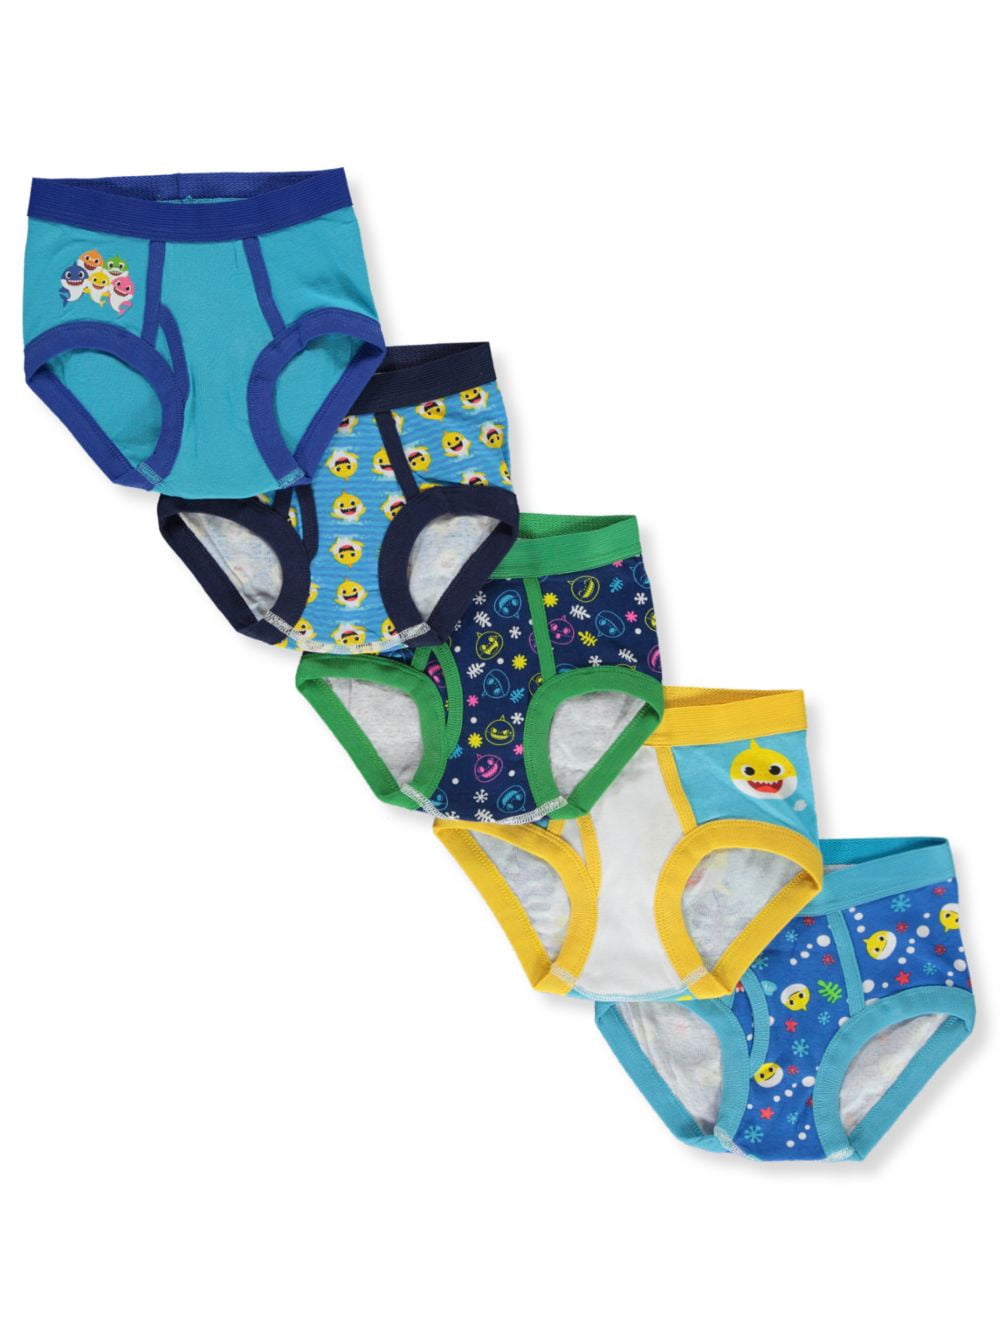 Baby Shark Boys' 5-Pack Briefs - blue/multi, 2t - 3t (Toddler) 